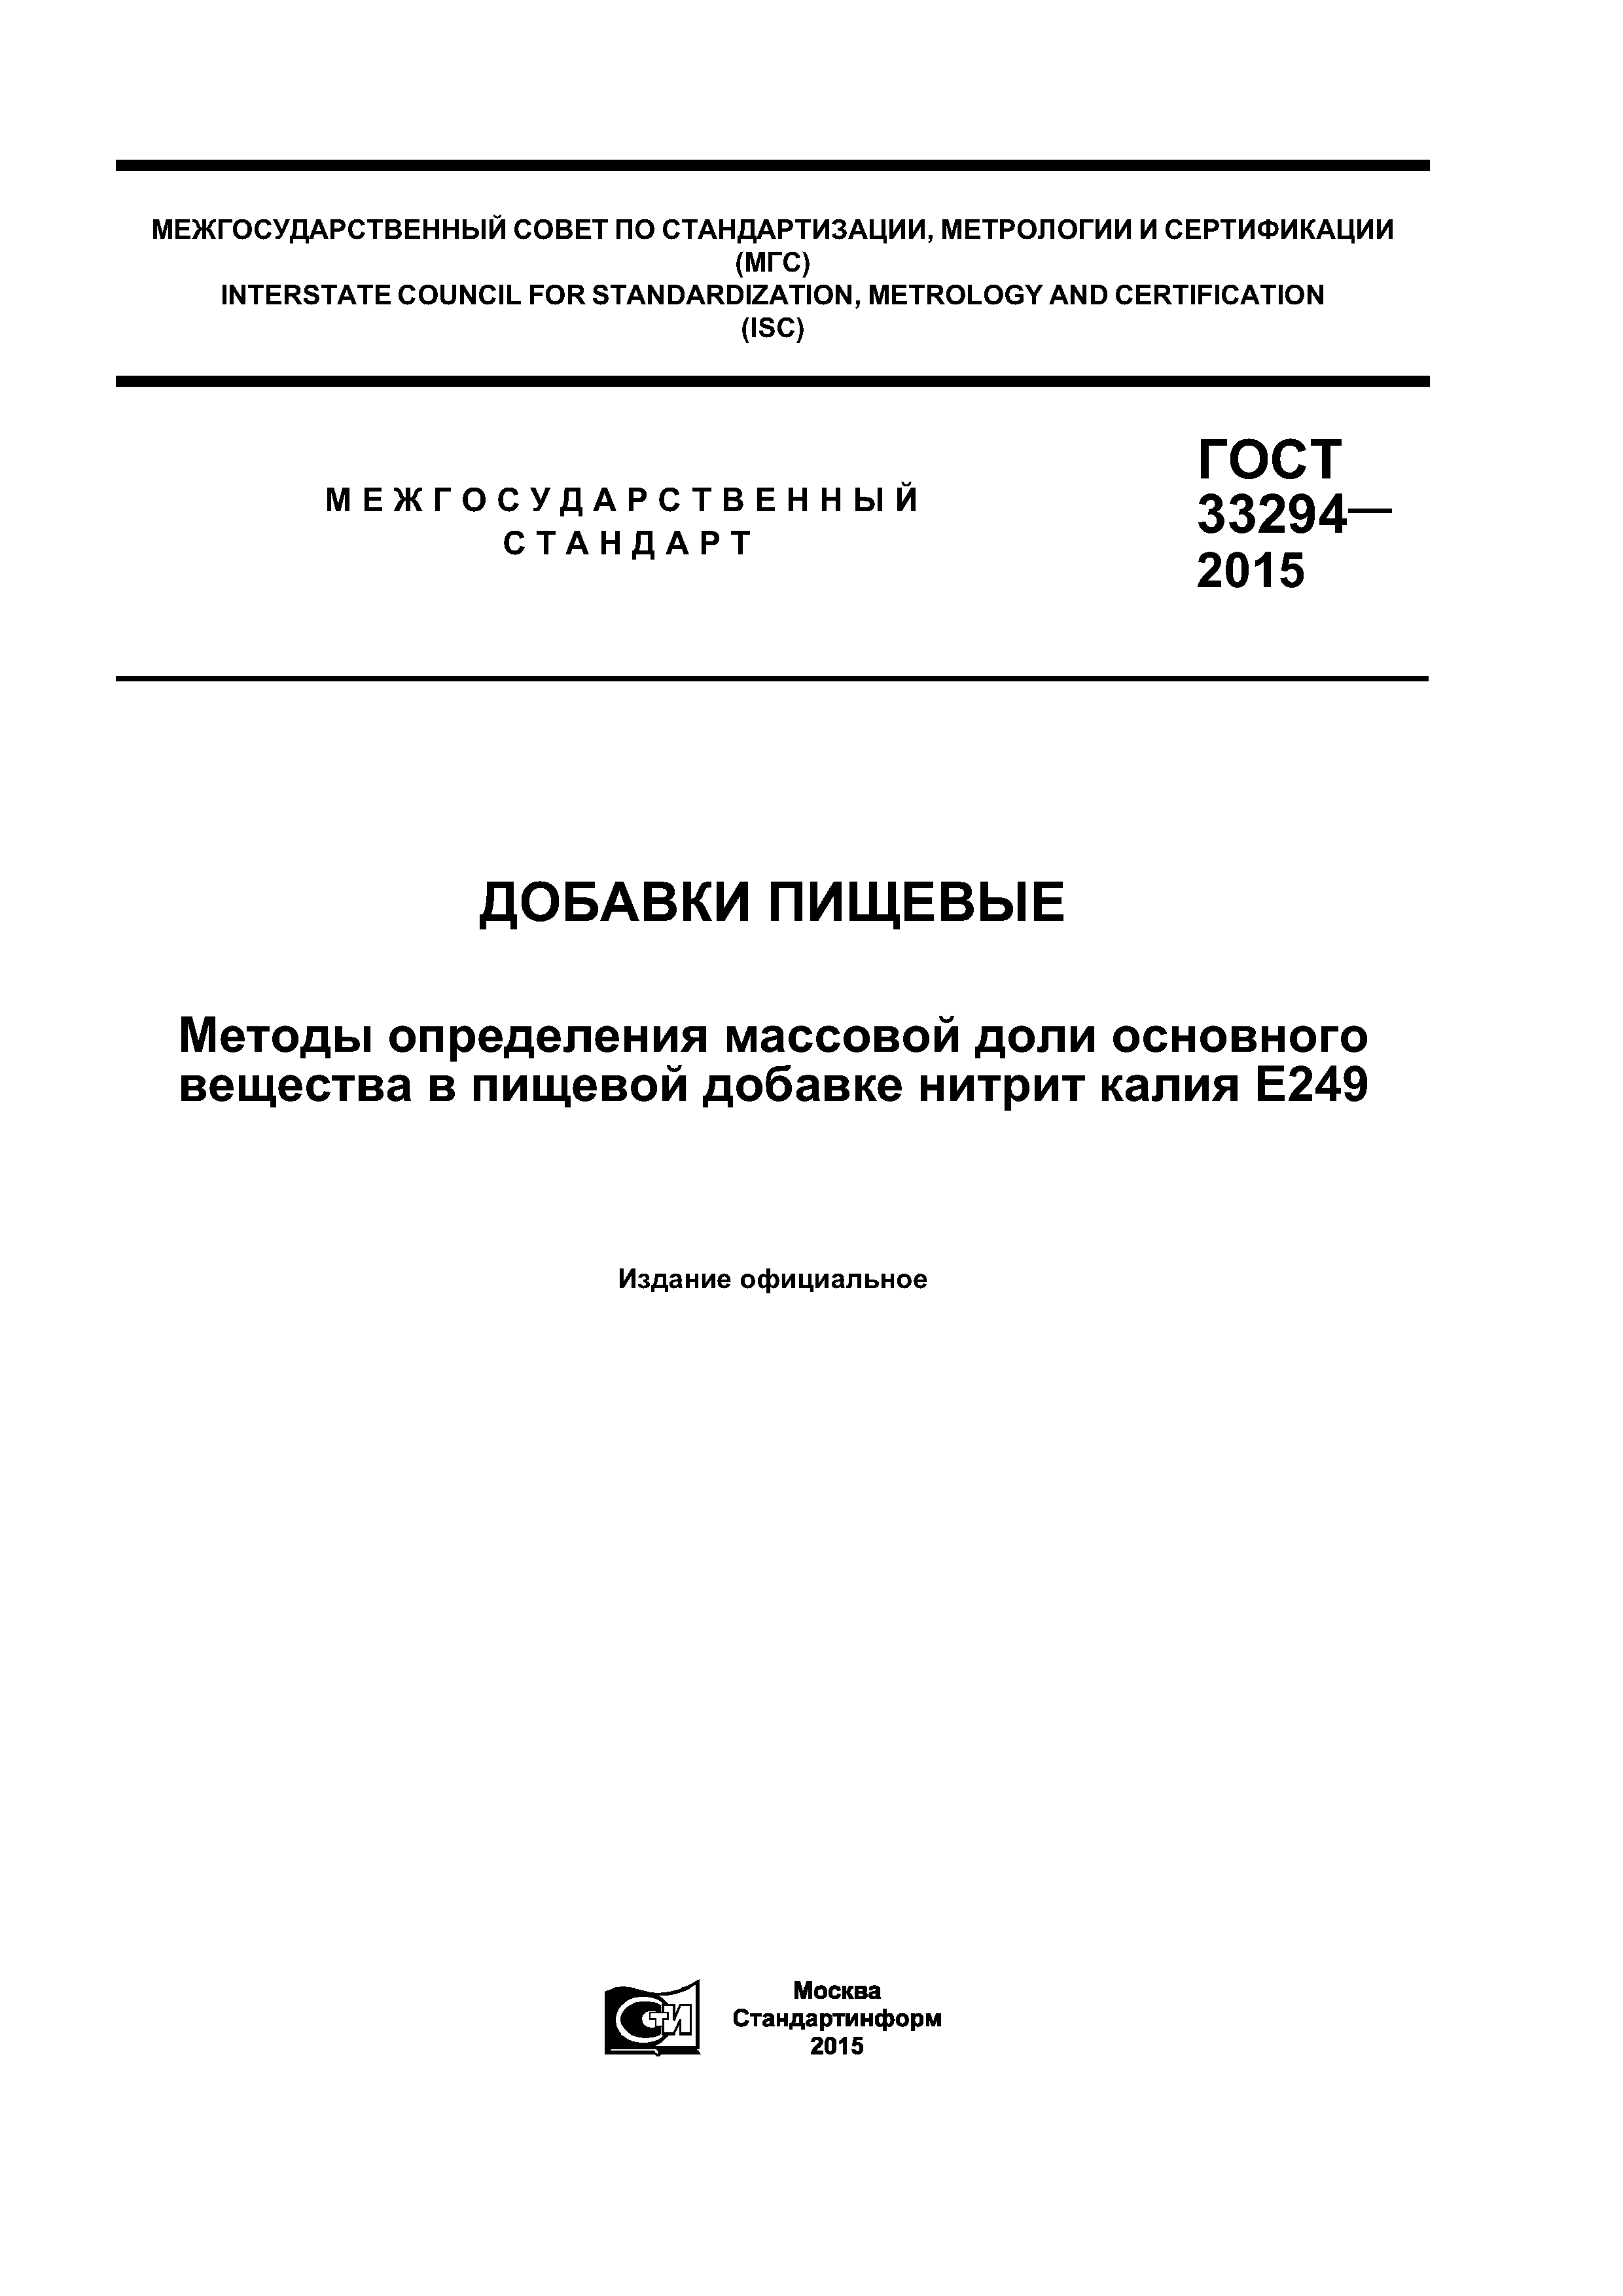 ГОСТ 33294-2015